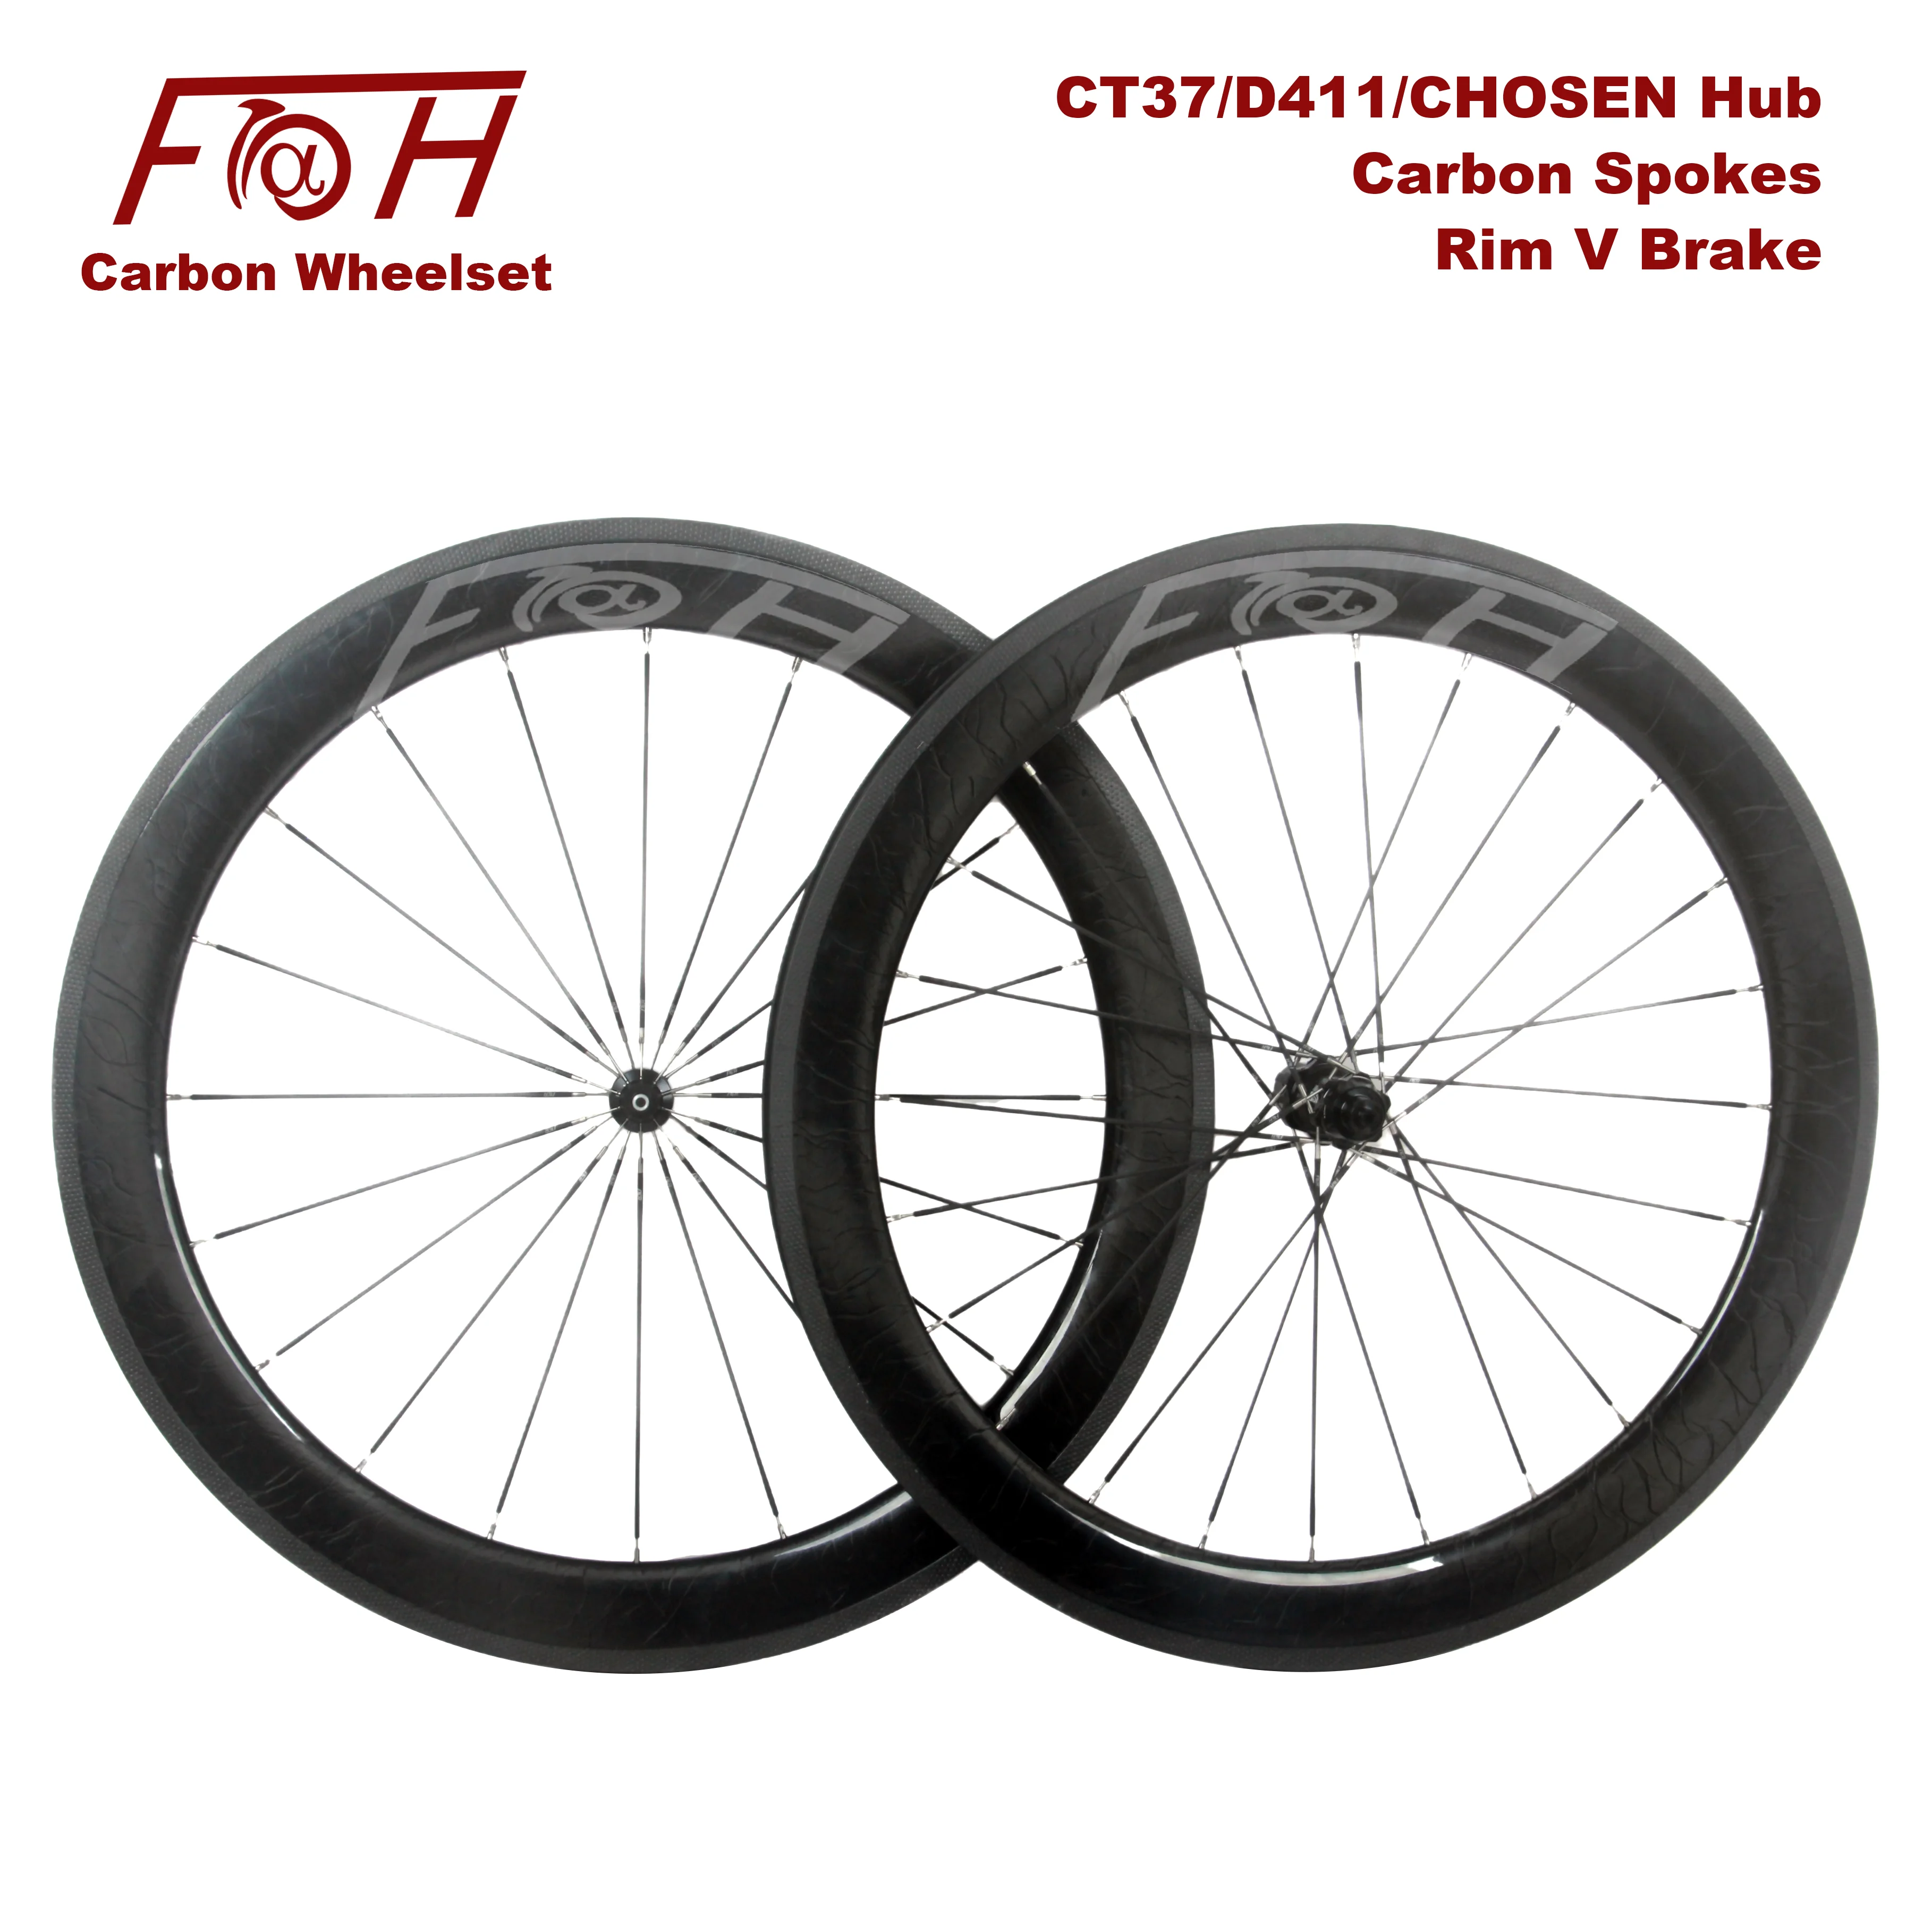 

F@H Standard Carbon Bicycle Wheelset Rim V Brake with Carbon Spoke 40 50 60mm Clincher Tubular Road Bike CT37 D411 CHOSEN Hub